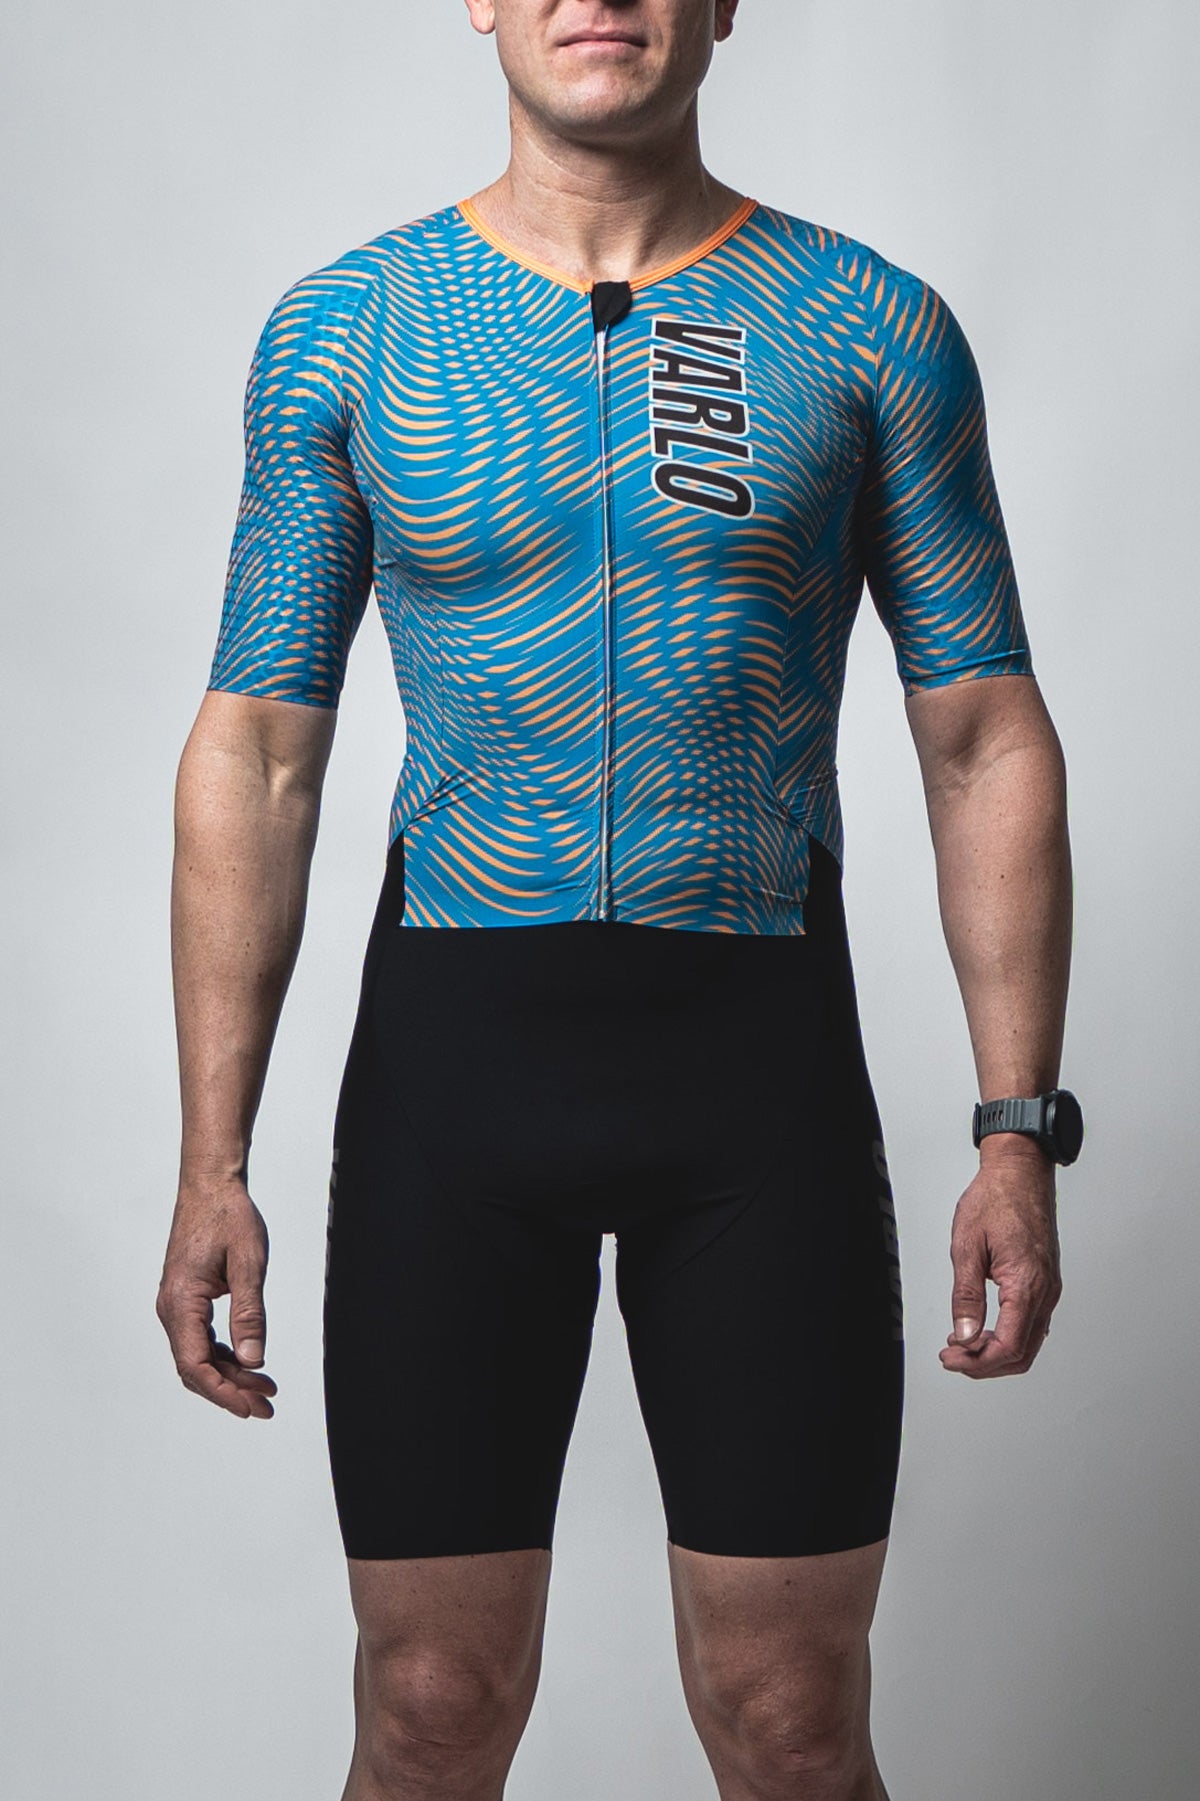 Aerodynamic Sleeved Men's Triathlon Suit, Made to Order